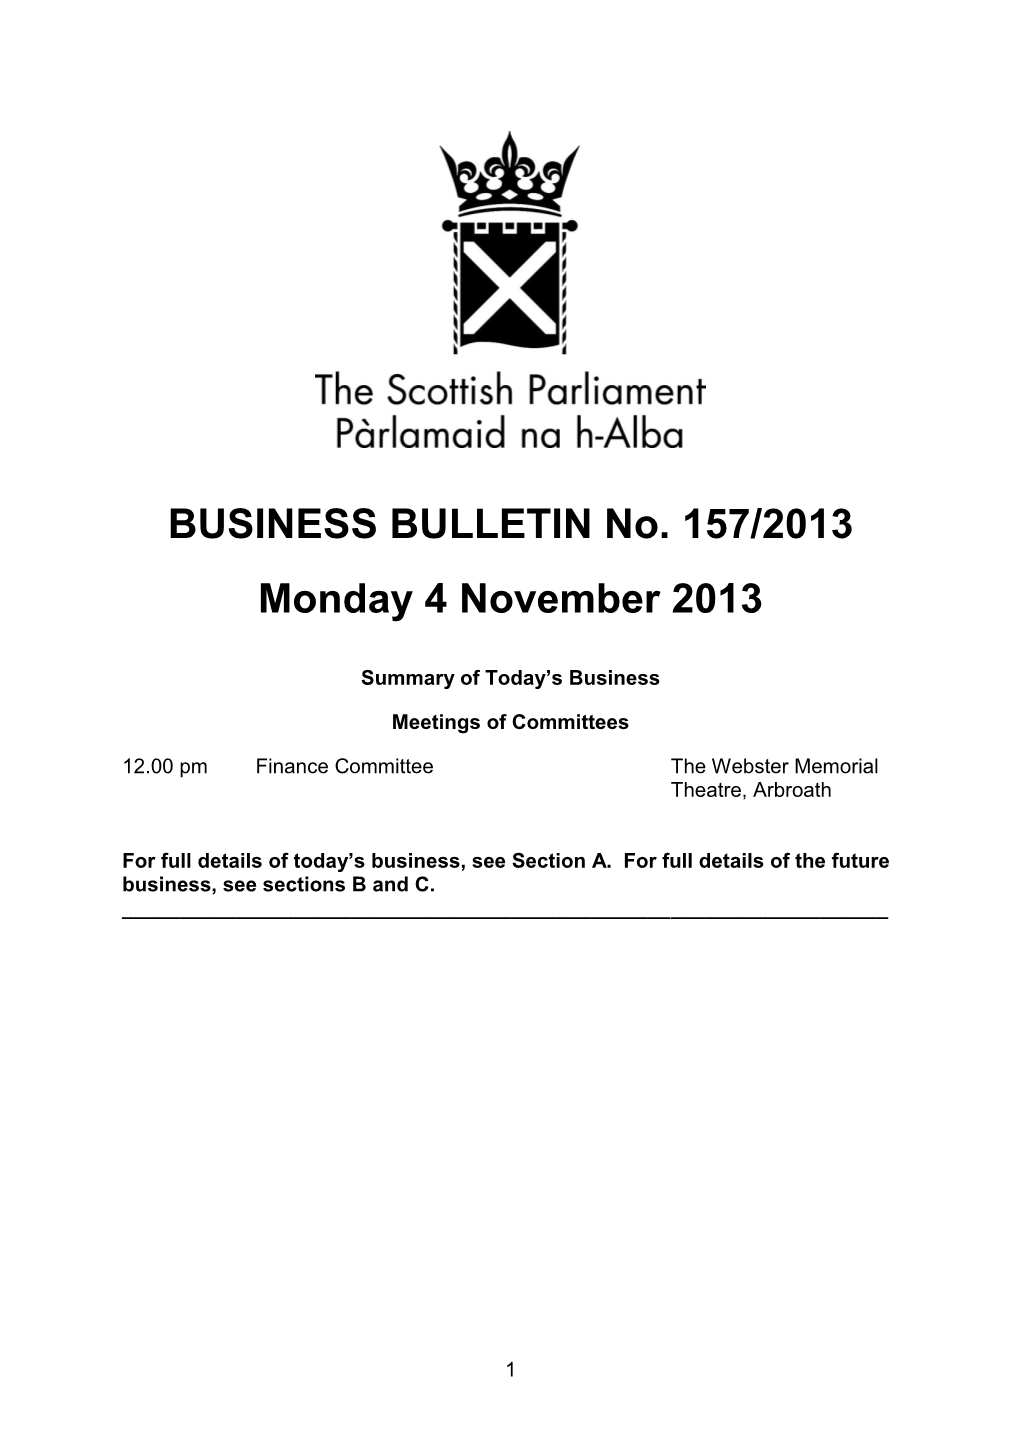 BUSINESS BULLETIN No. 157/2013 Monday 4 November 2013